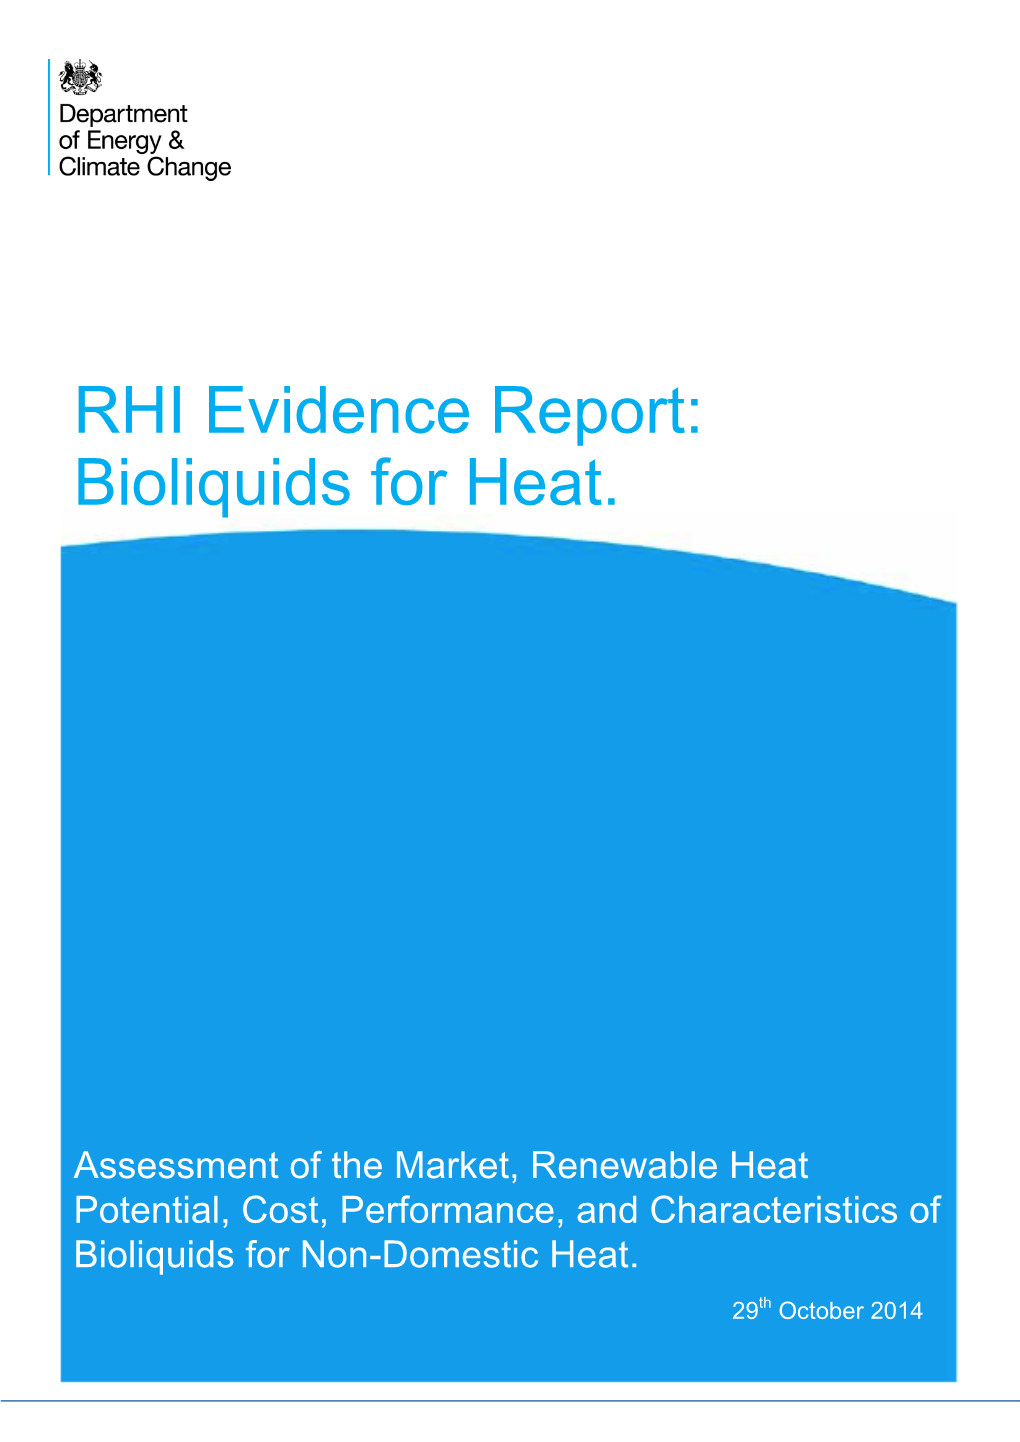 RHI Evidence Report: Bioliquids for Heat